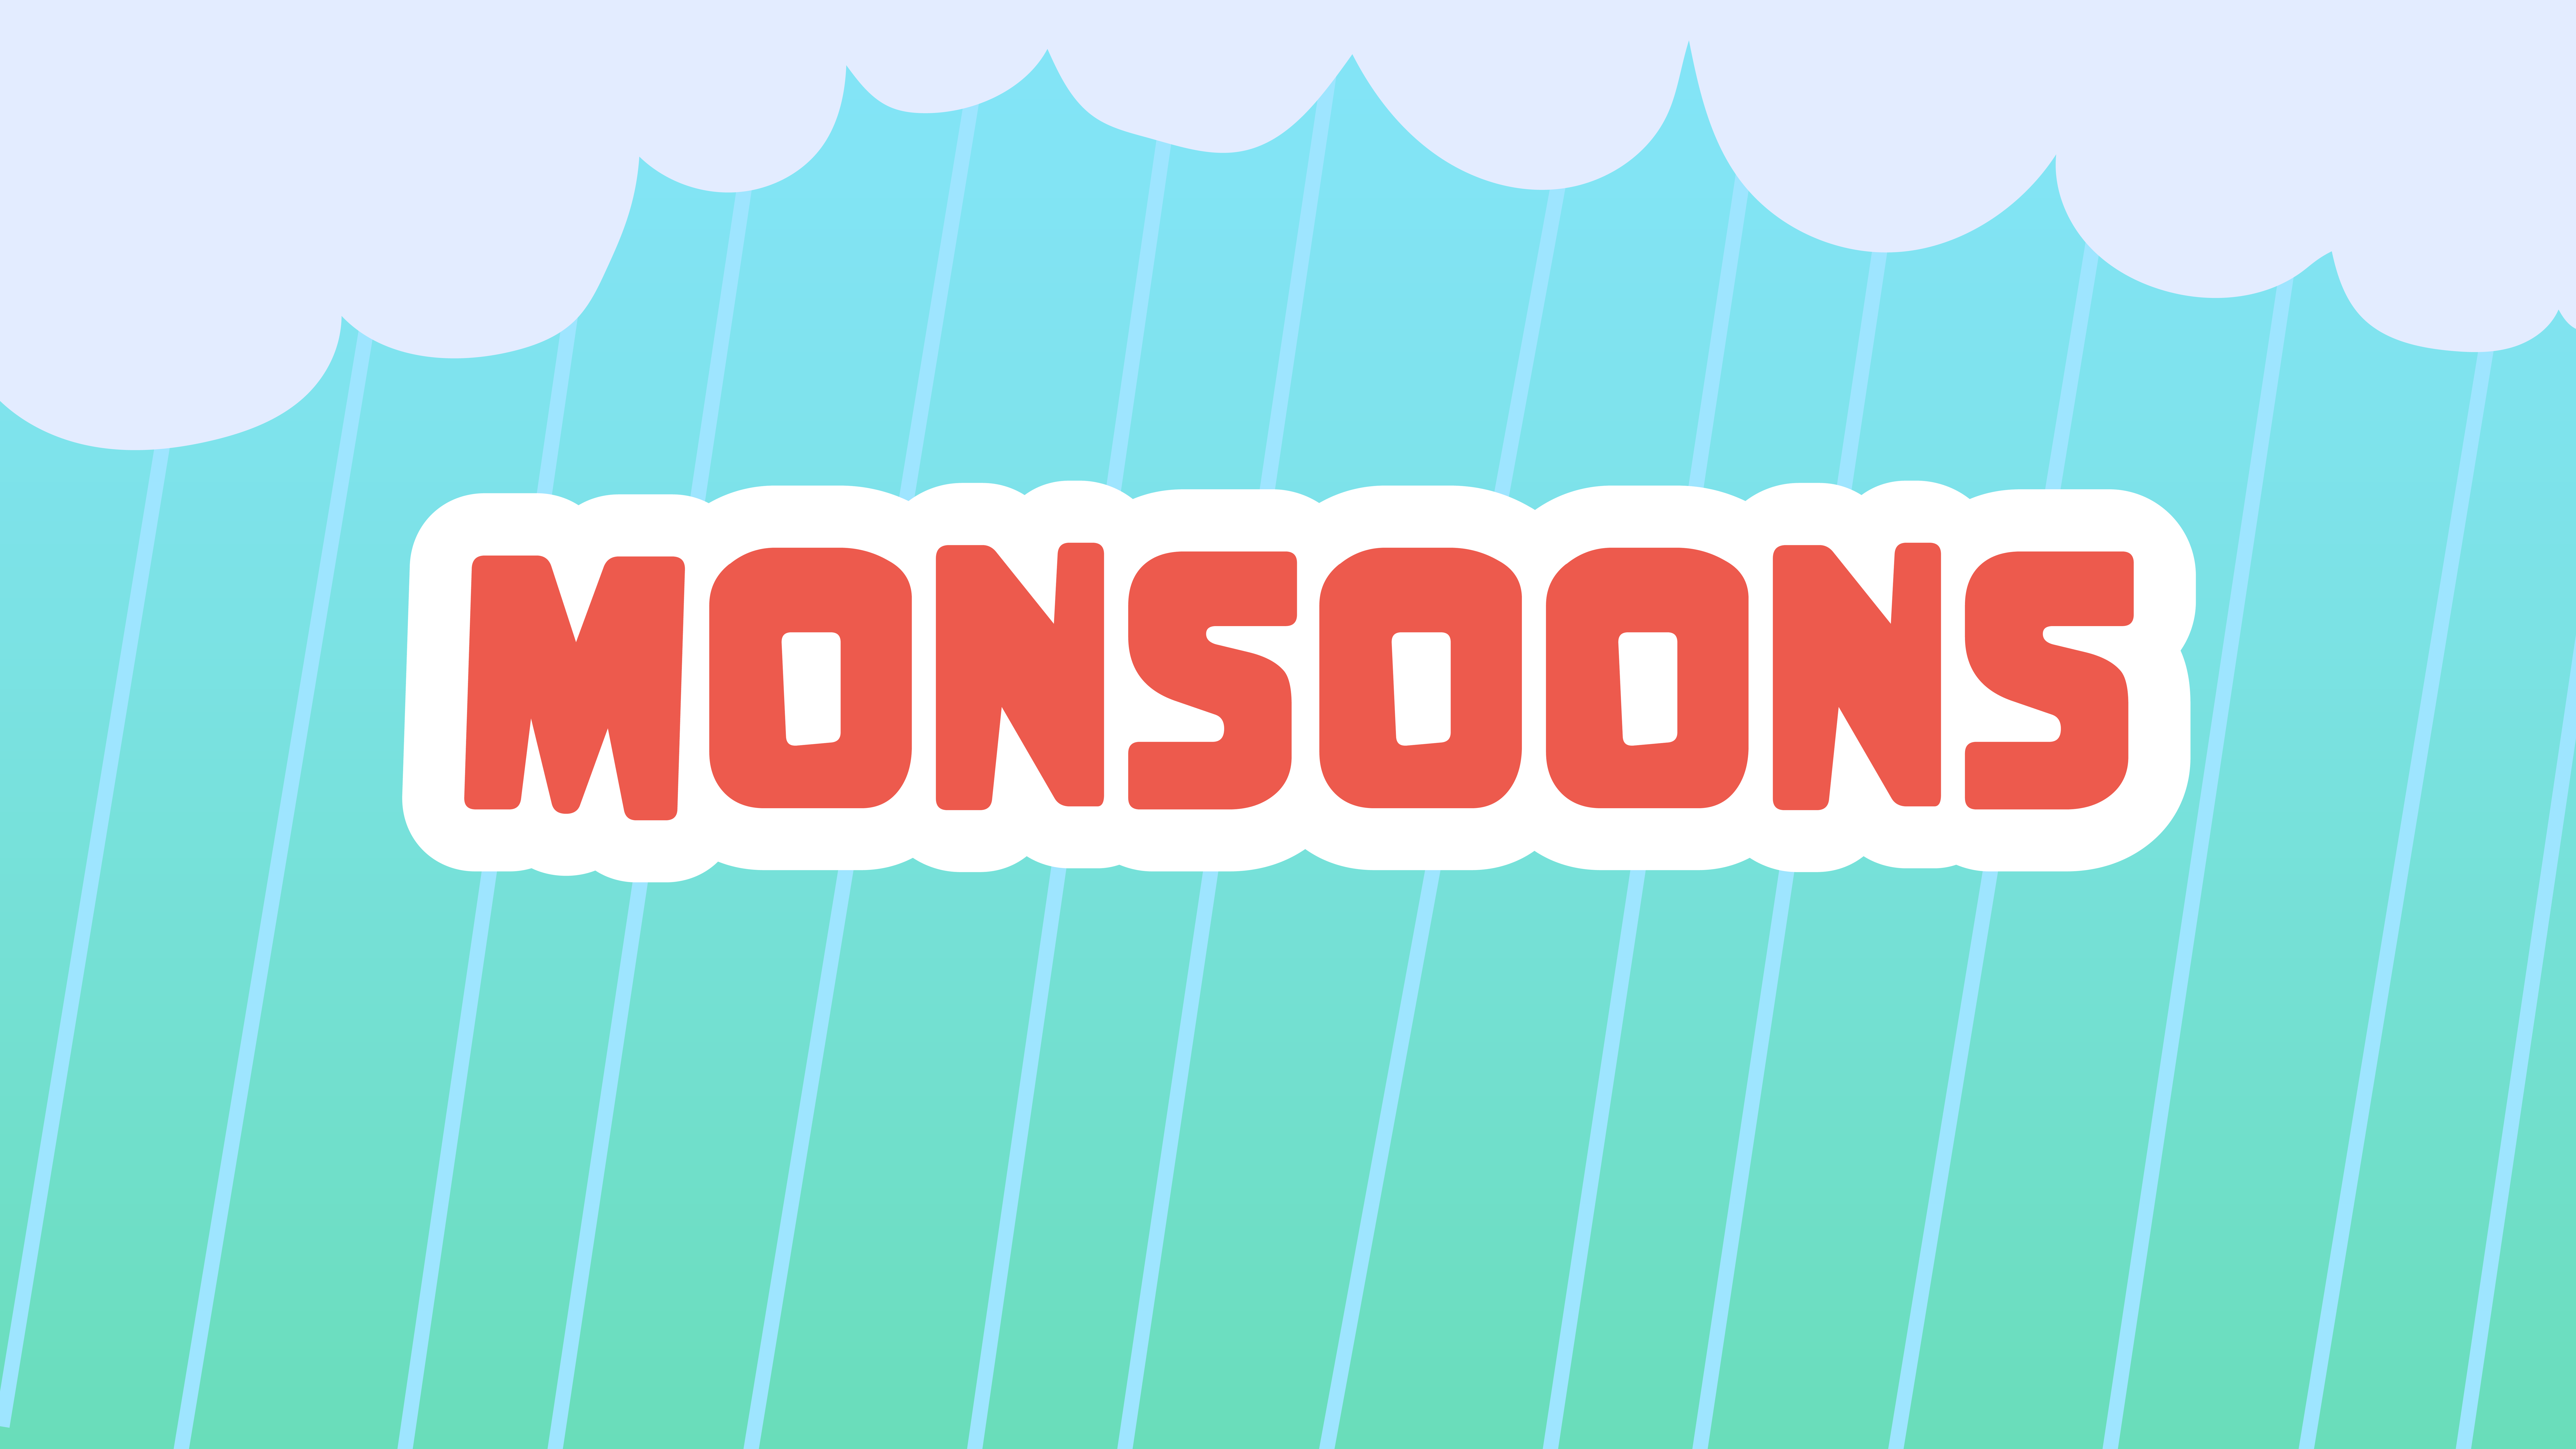 Monsoons